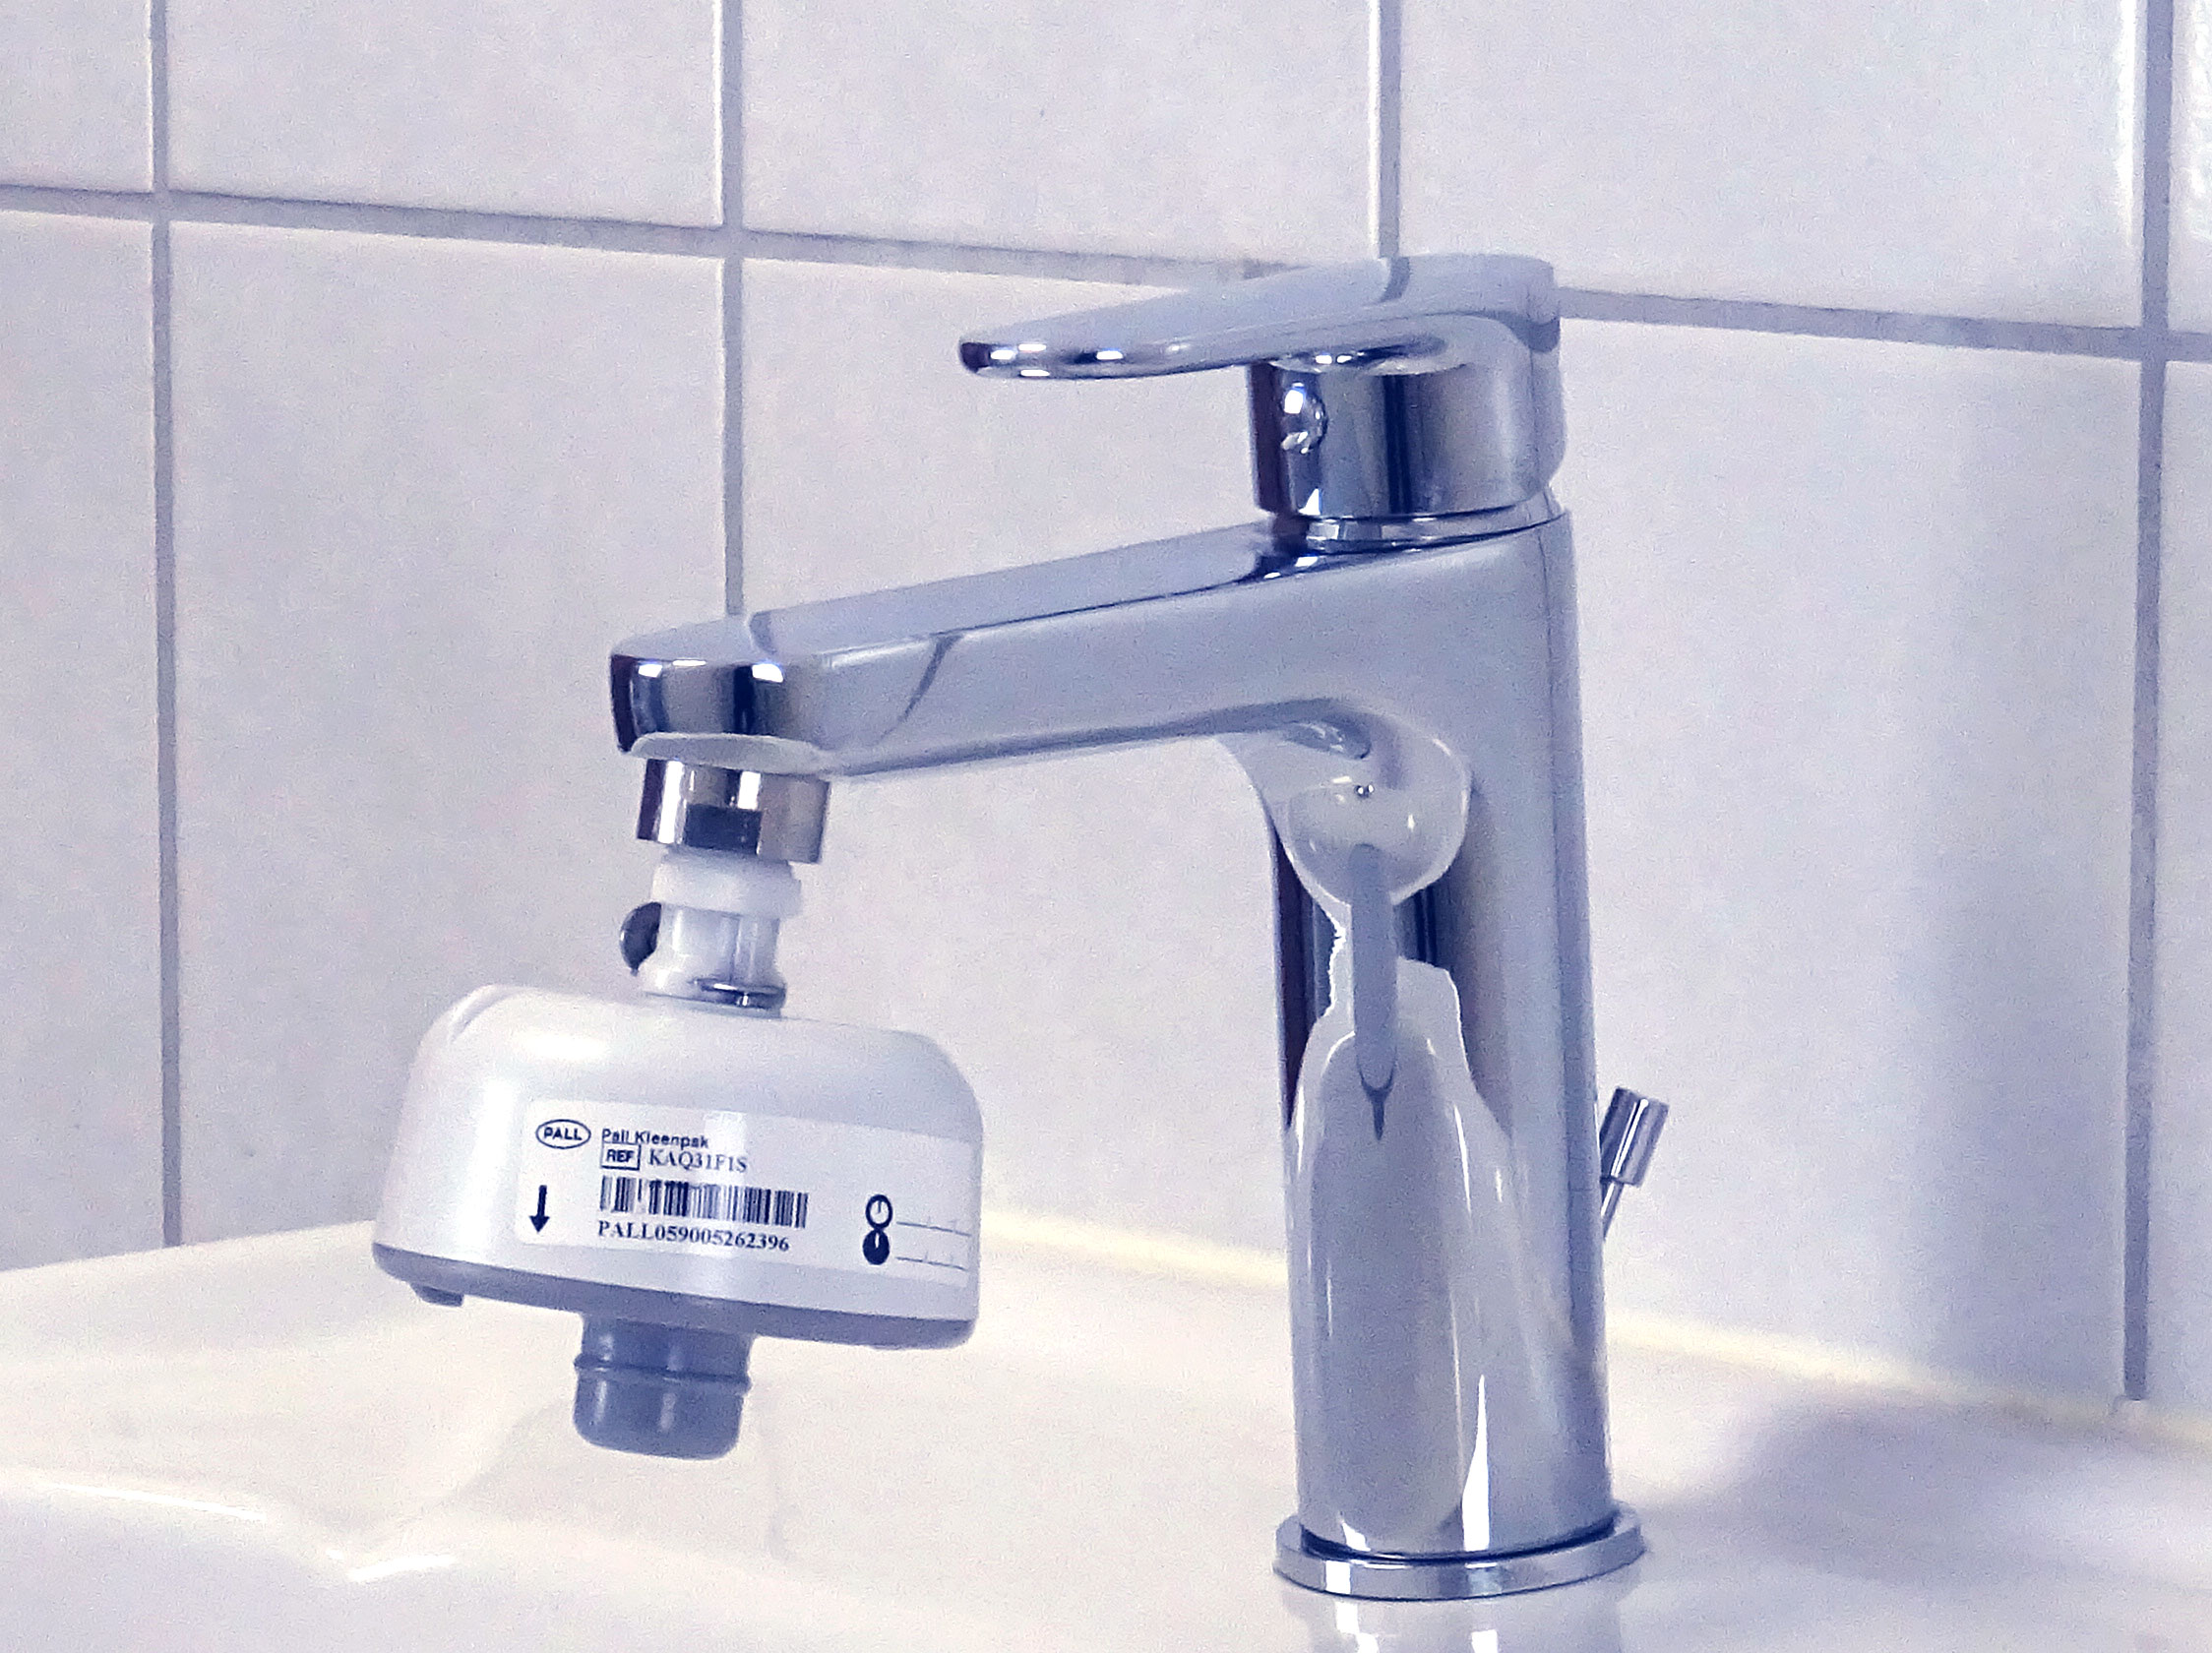 Filteria-Universaladapter-Set für Wassersterilfilter zum Anschluss an Waschbeckenarmaturen